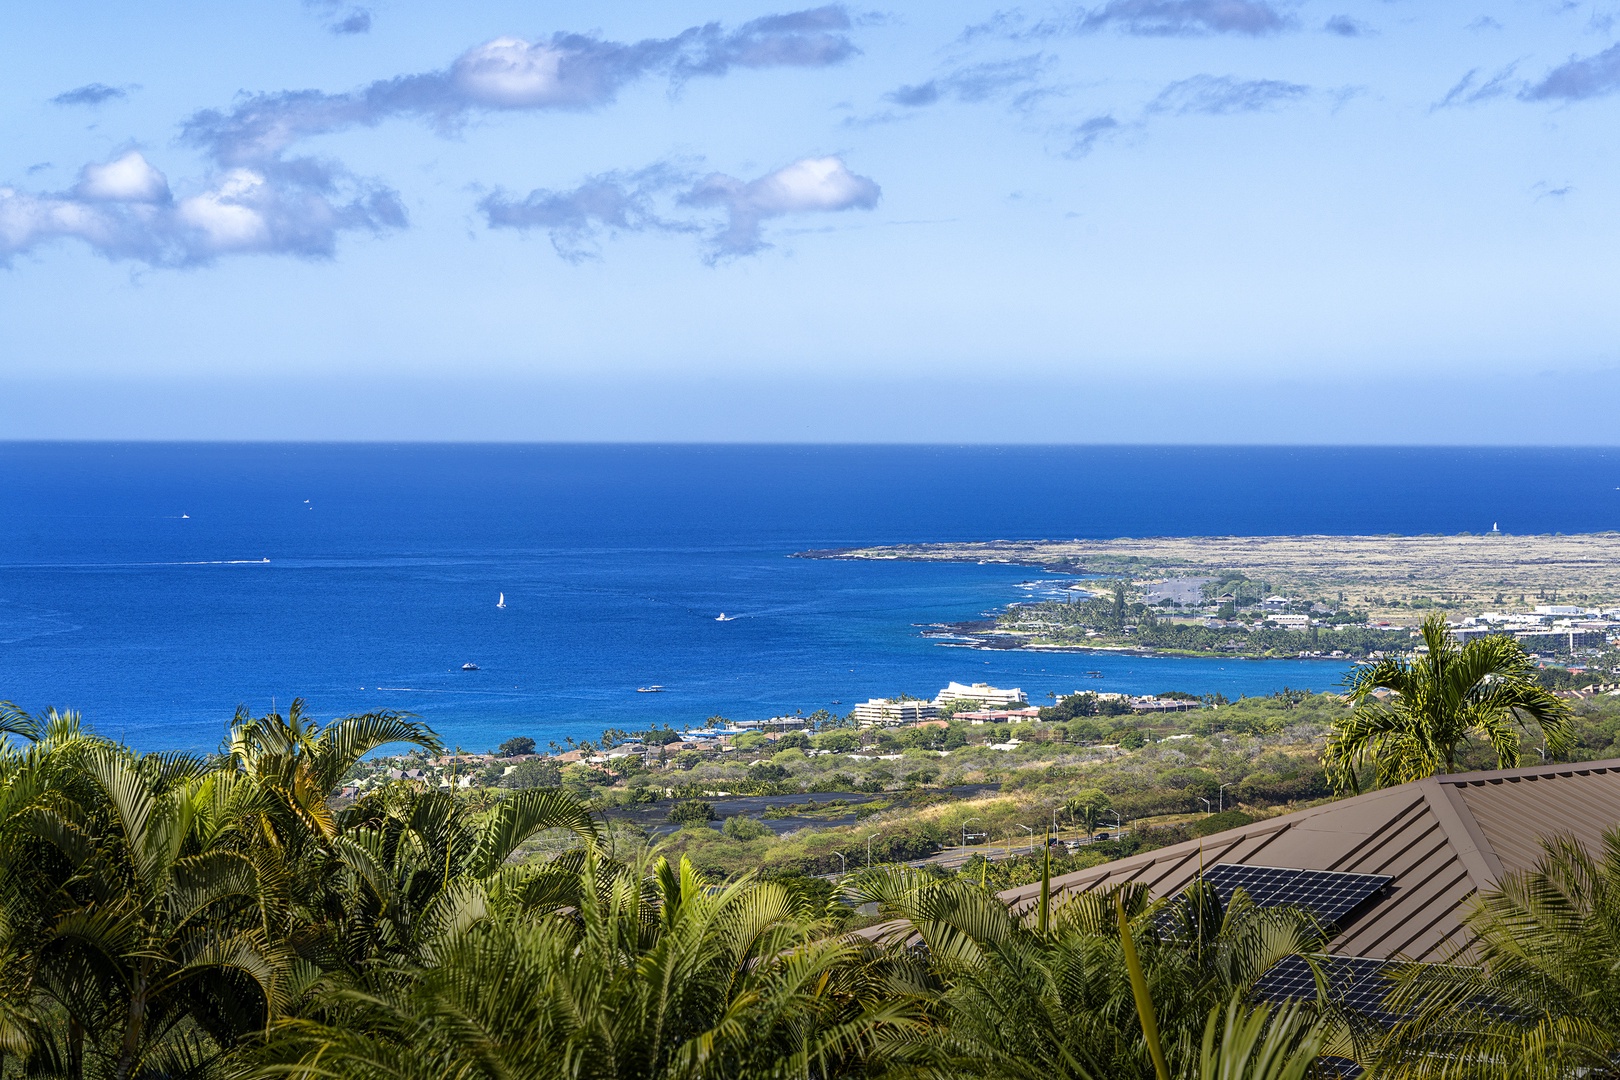 Kailua Kona Vacation Rentals, Hale Aikane - Imagine waking up to this view!